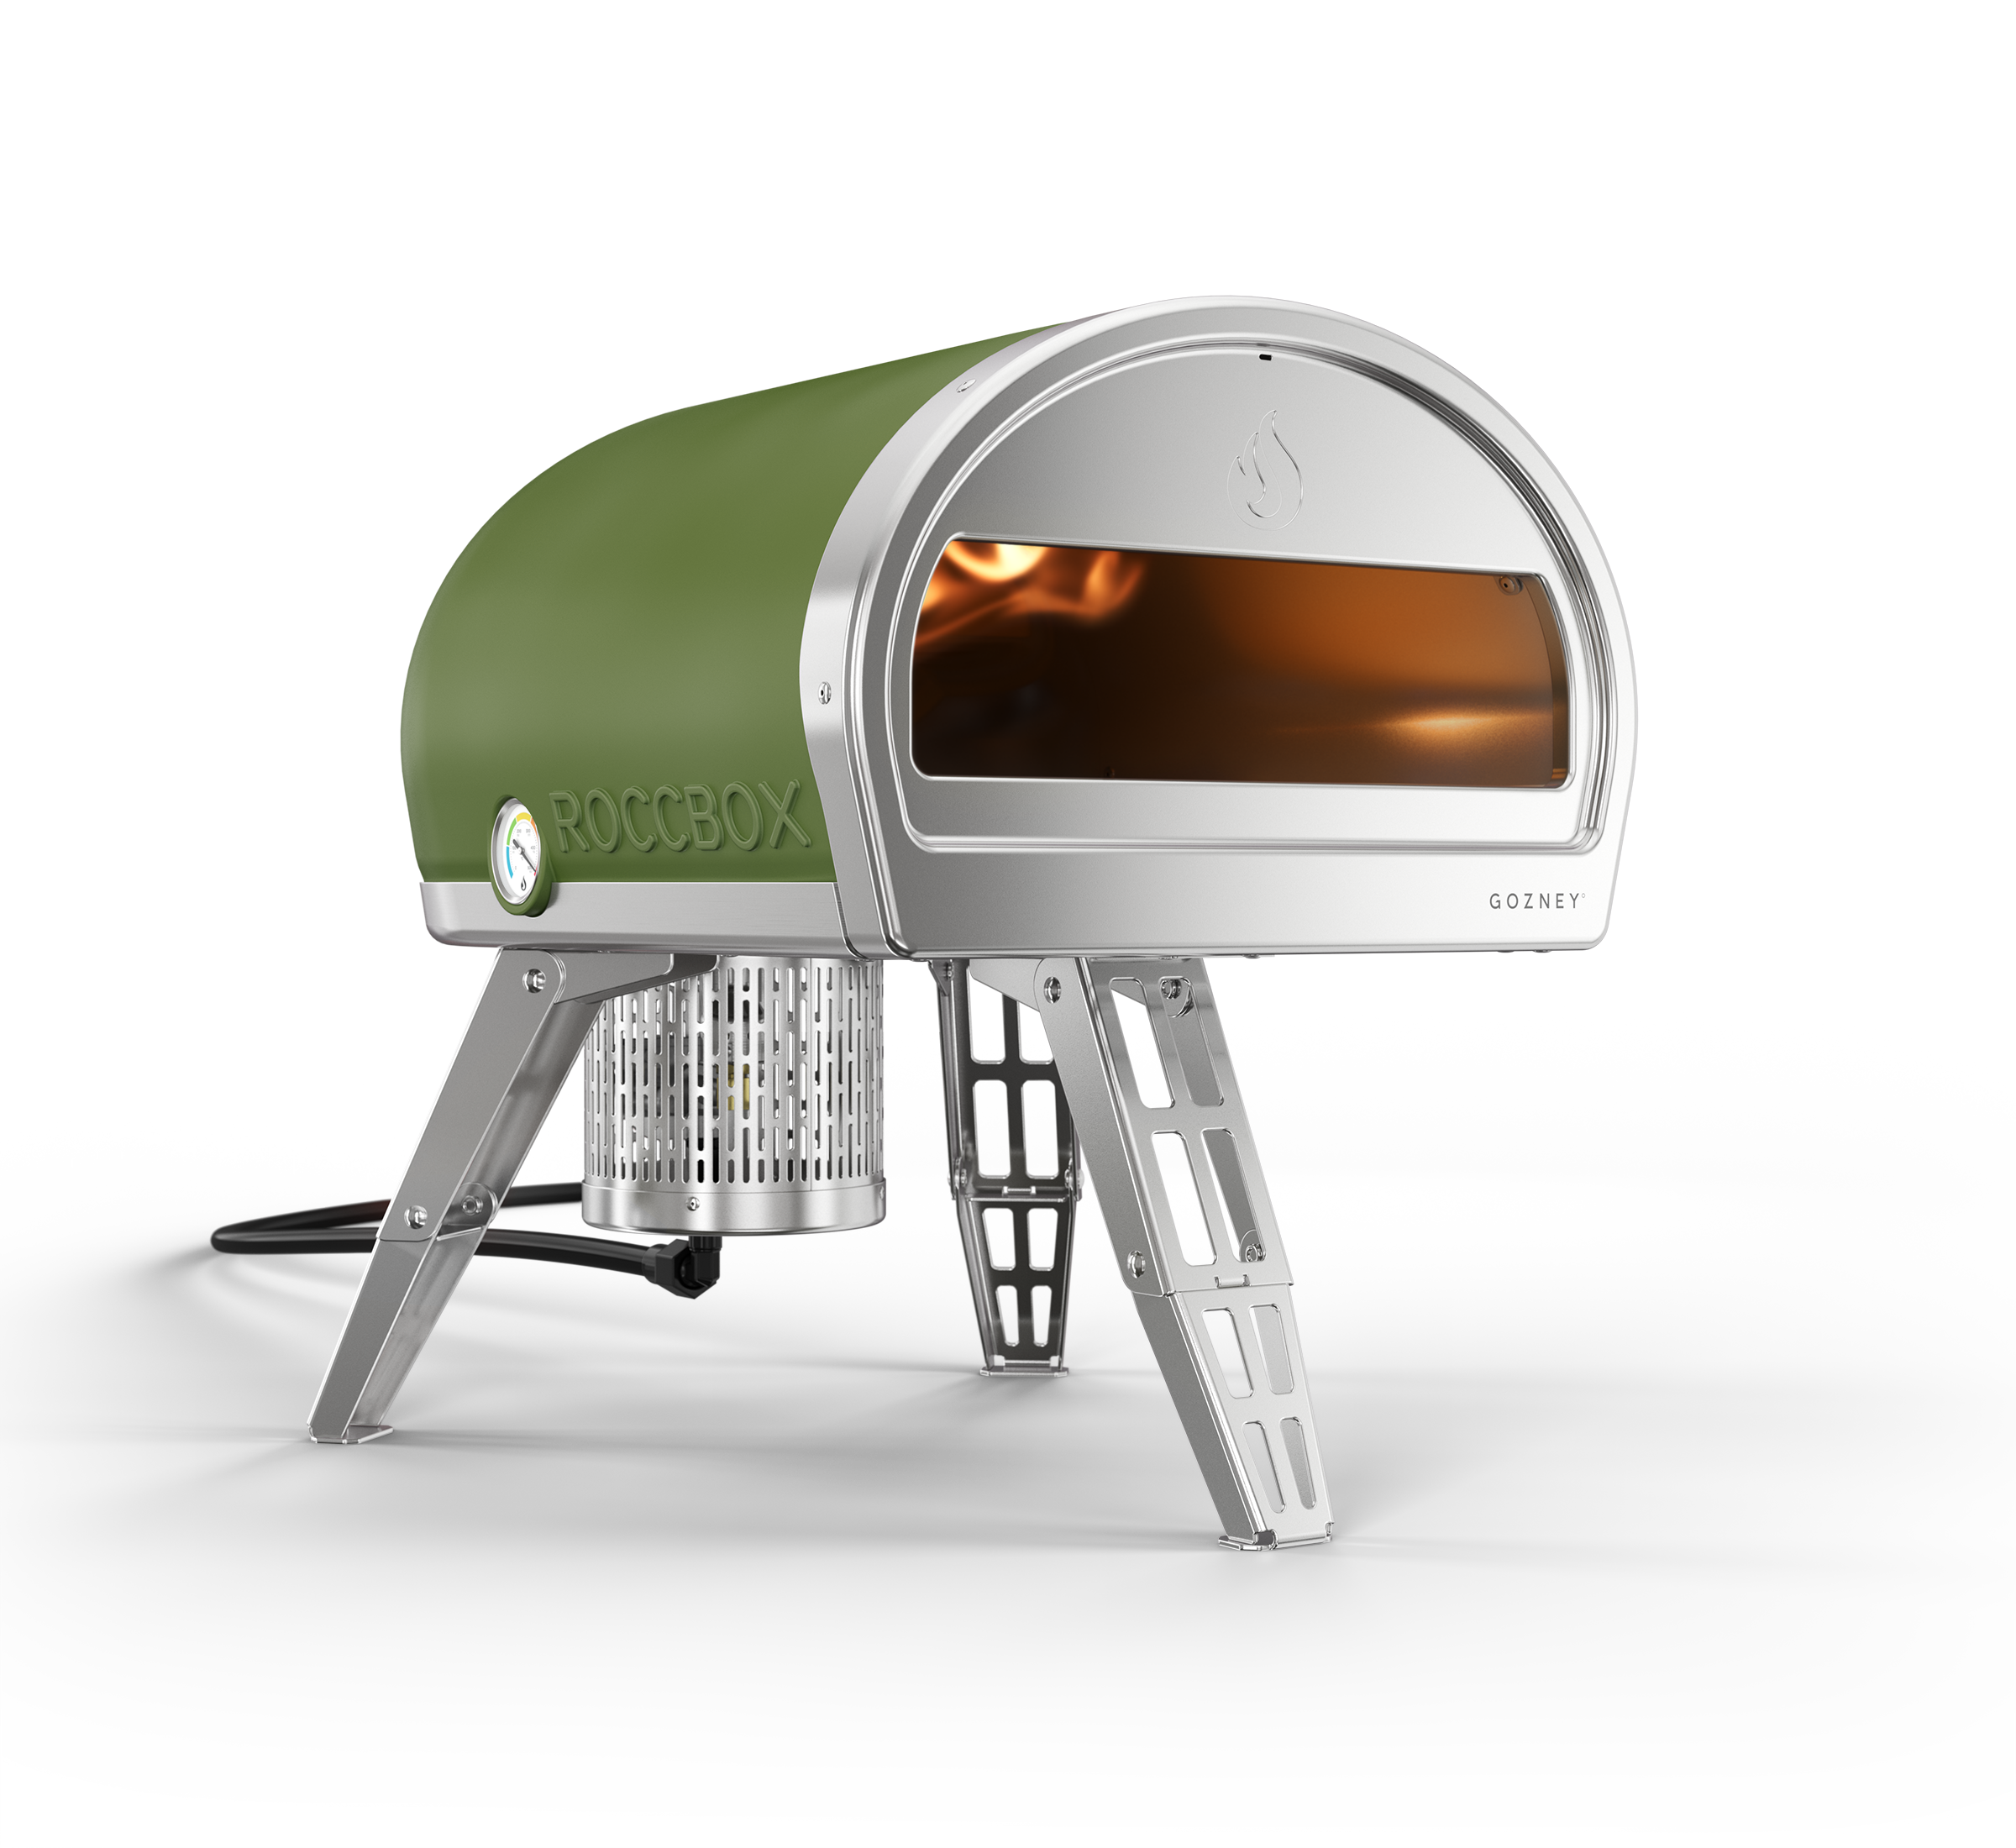 Gozney Roccbox Portable Pizza Oven - Green Color